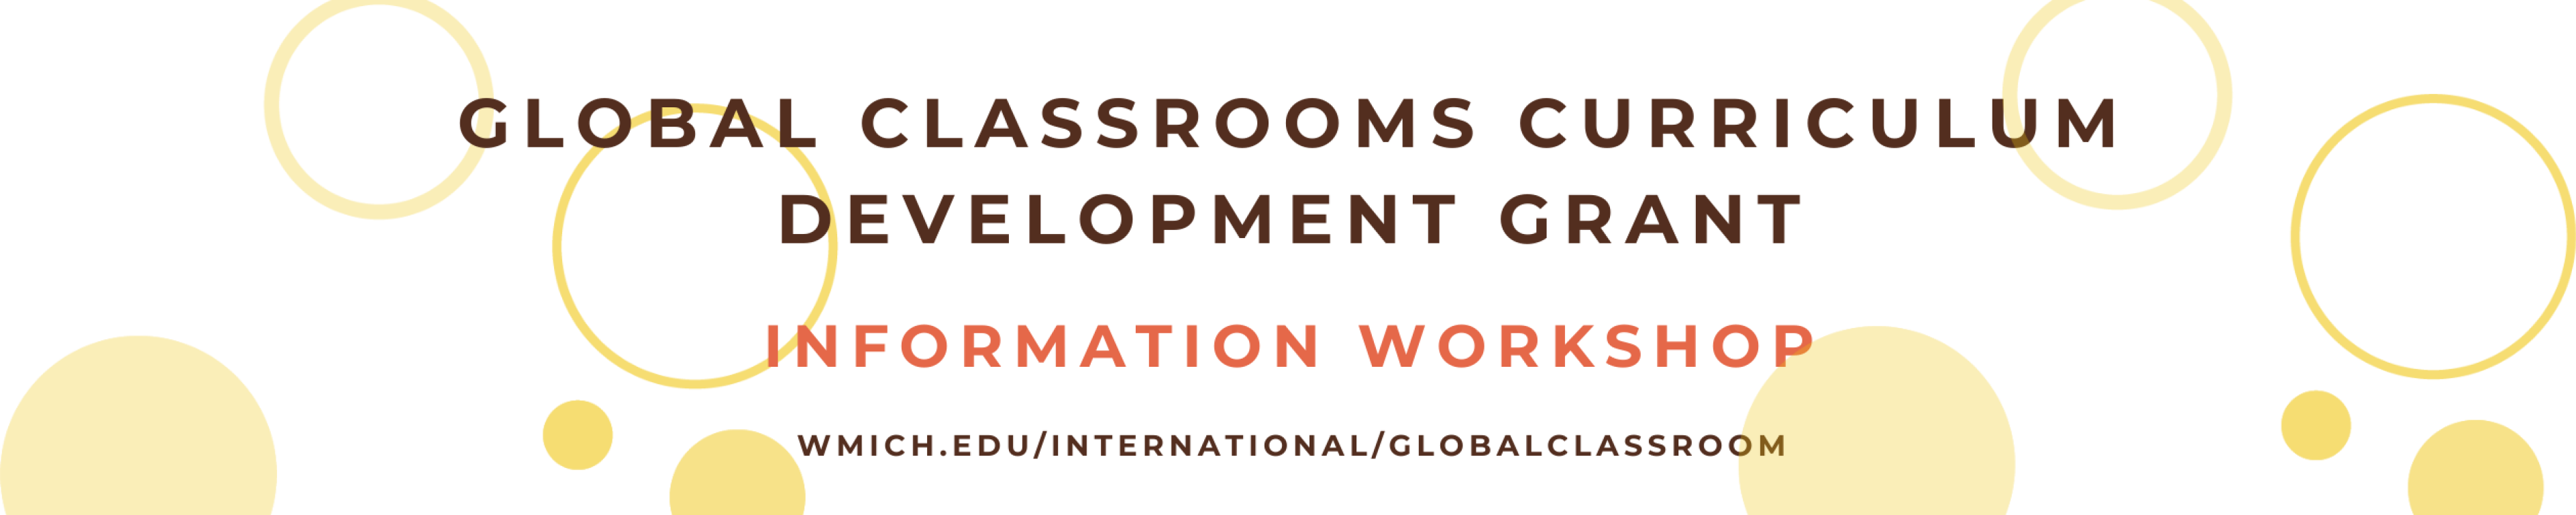 Decorative Image: "Global Classrooms Curriculum Development Grant: Information Workshop"